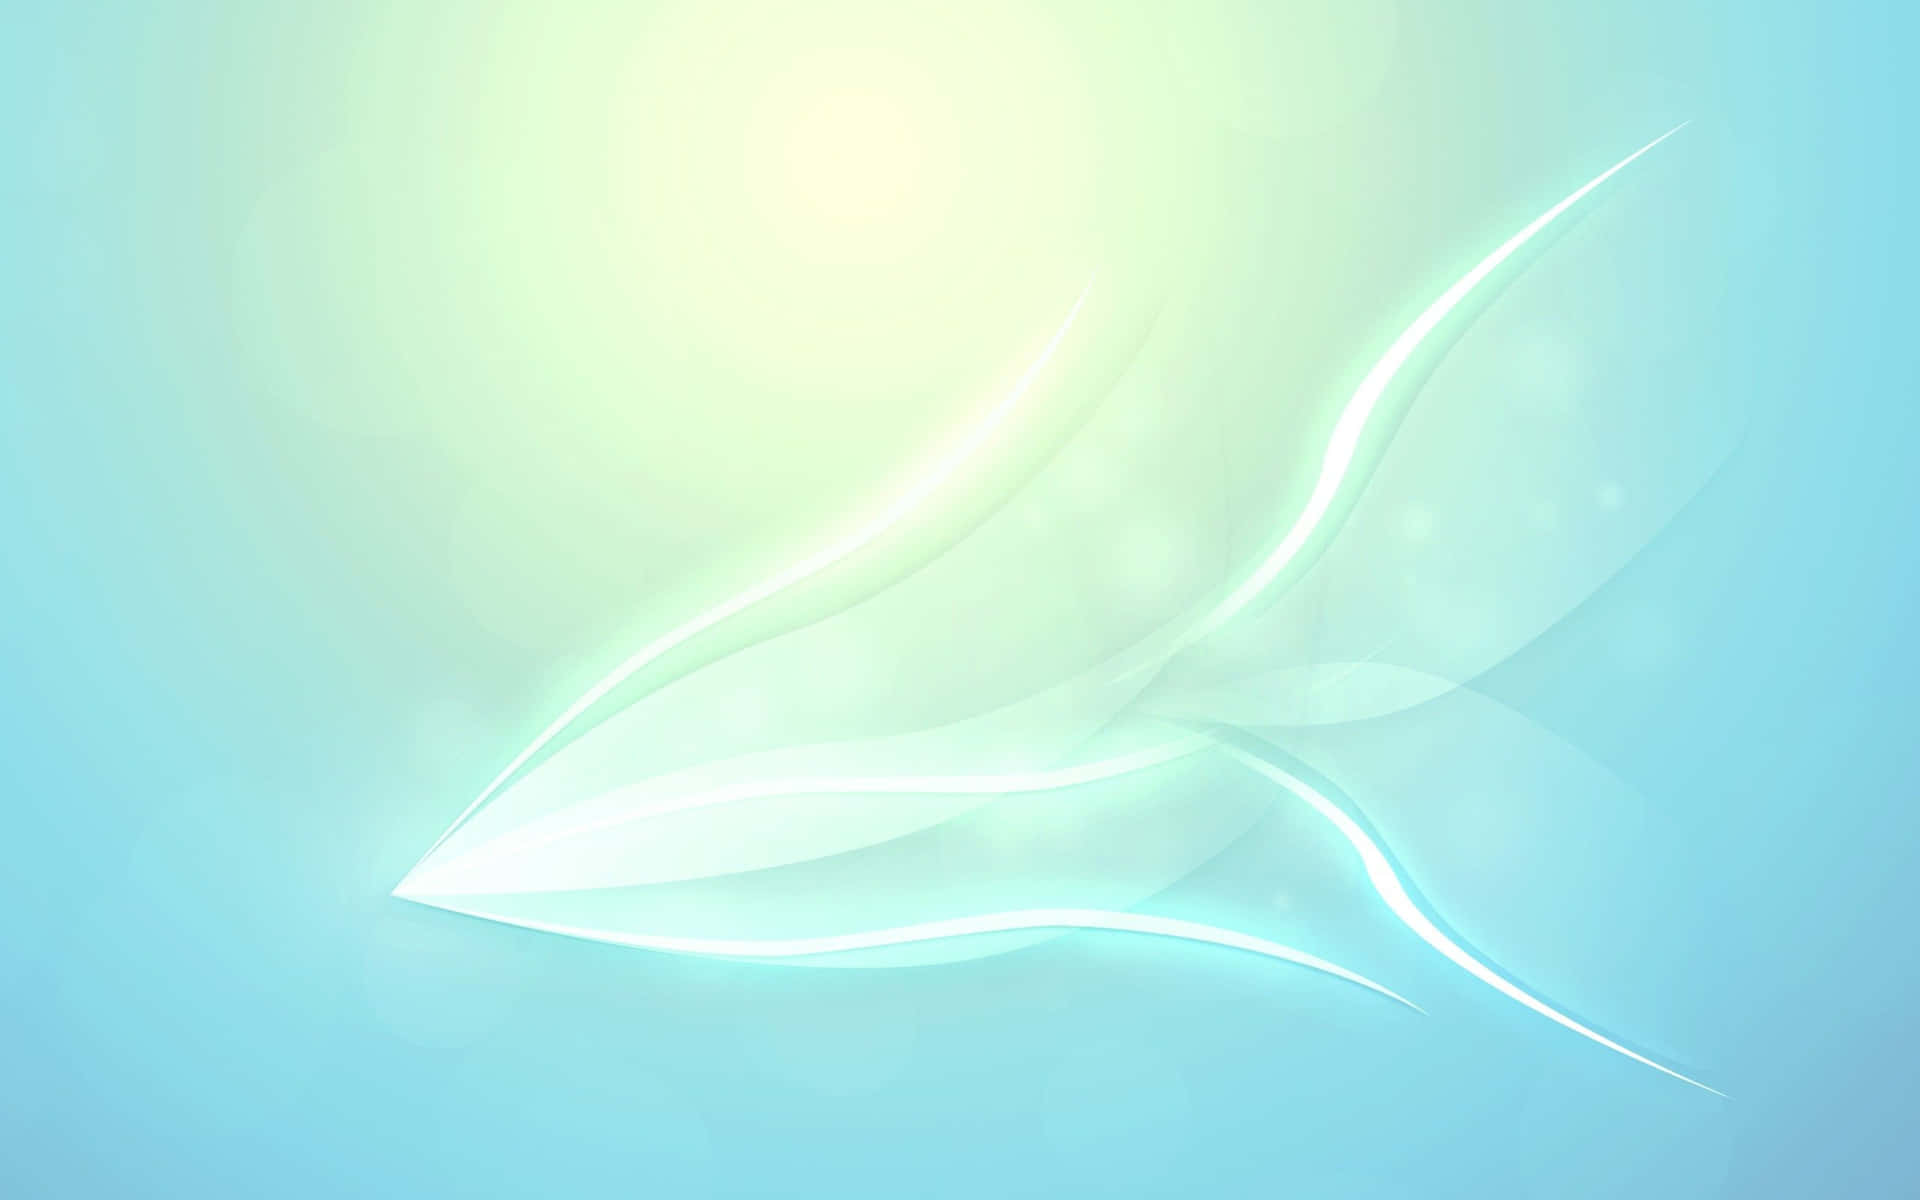 Soft Blue Curved Light Background